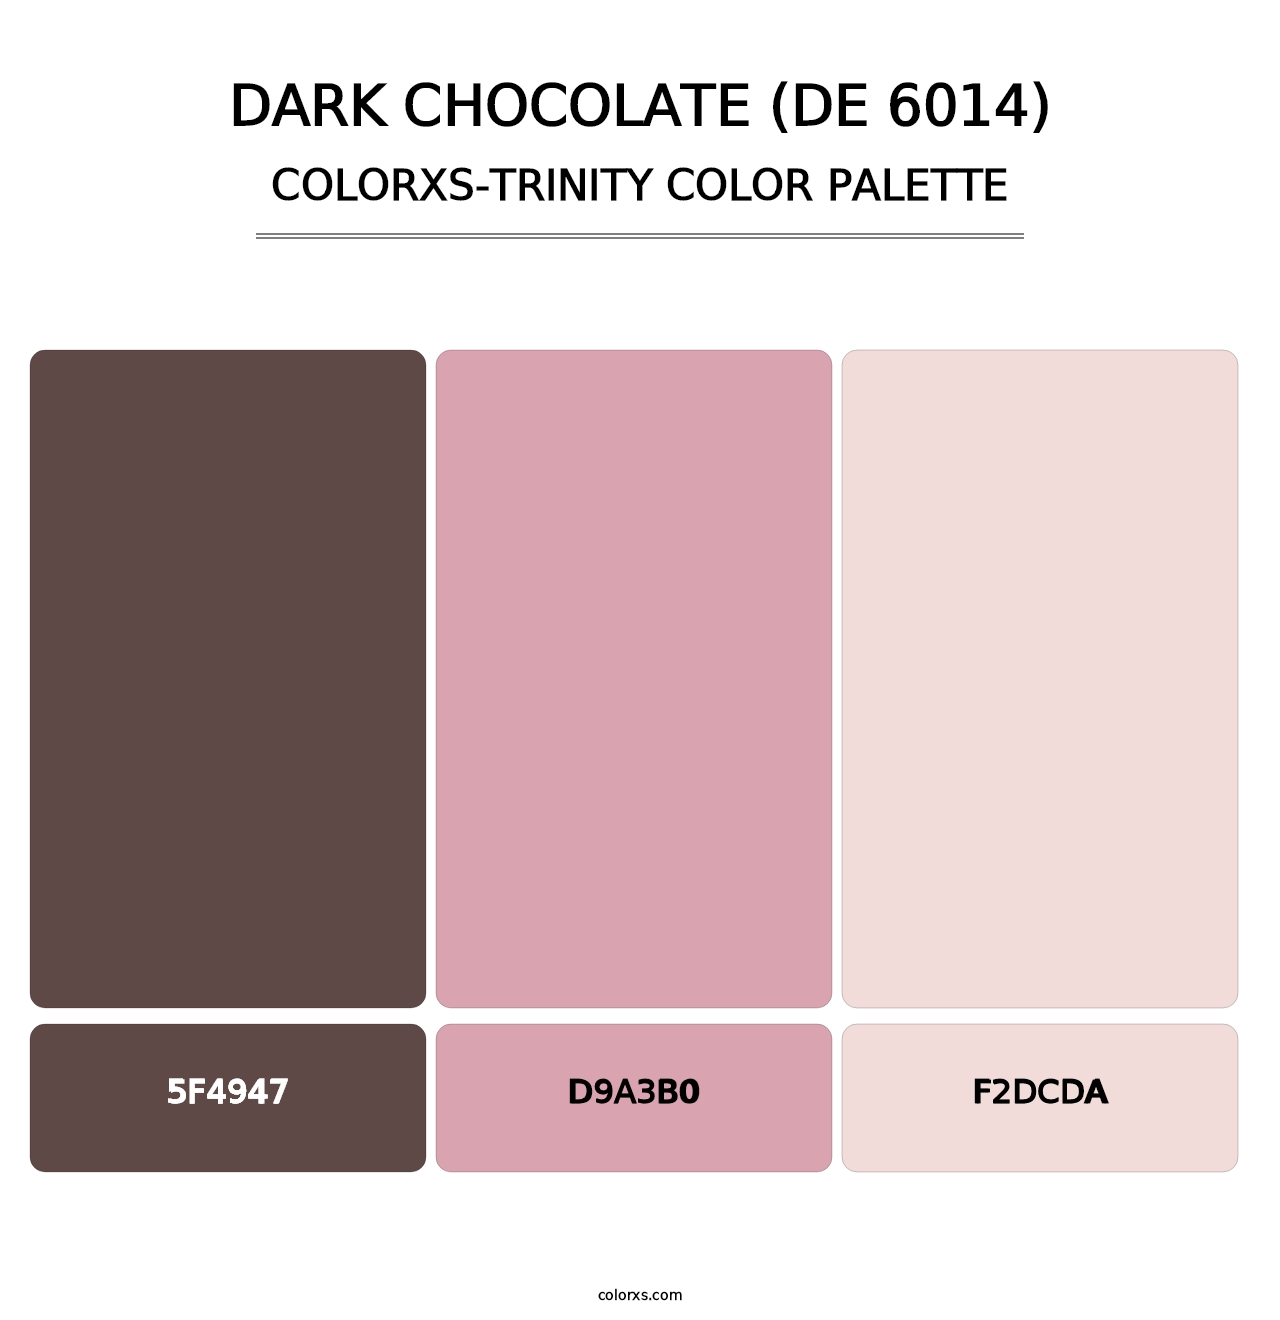 Dark Chocolate (DE 6014) - Colorxs Trinity Palette